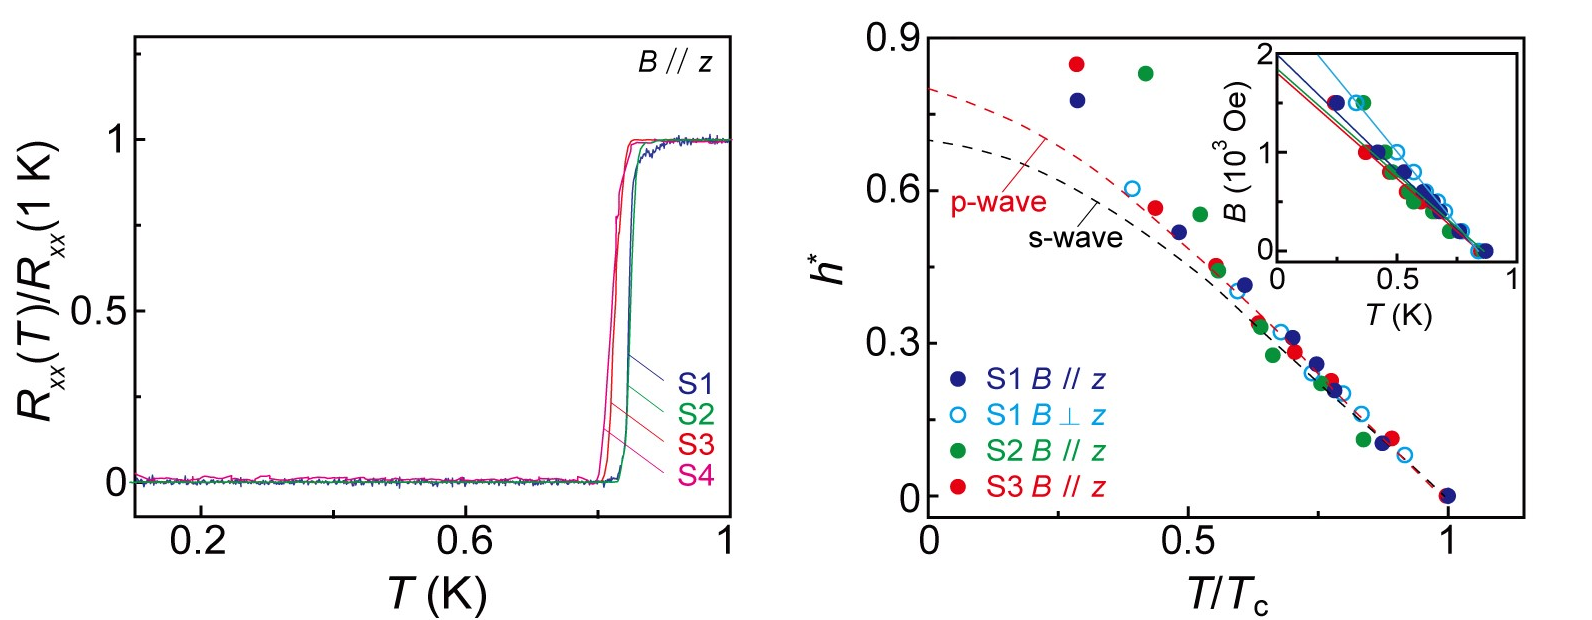 KZnBi의 초전도 현상 (좌) 과 임계 자기장 측정을 통해 일반적인 초전도체 (s-wave)와는 다른 특이한 초전도 현상 확인 (우)